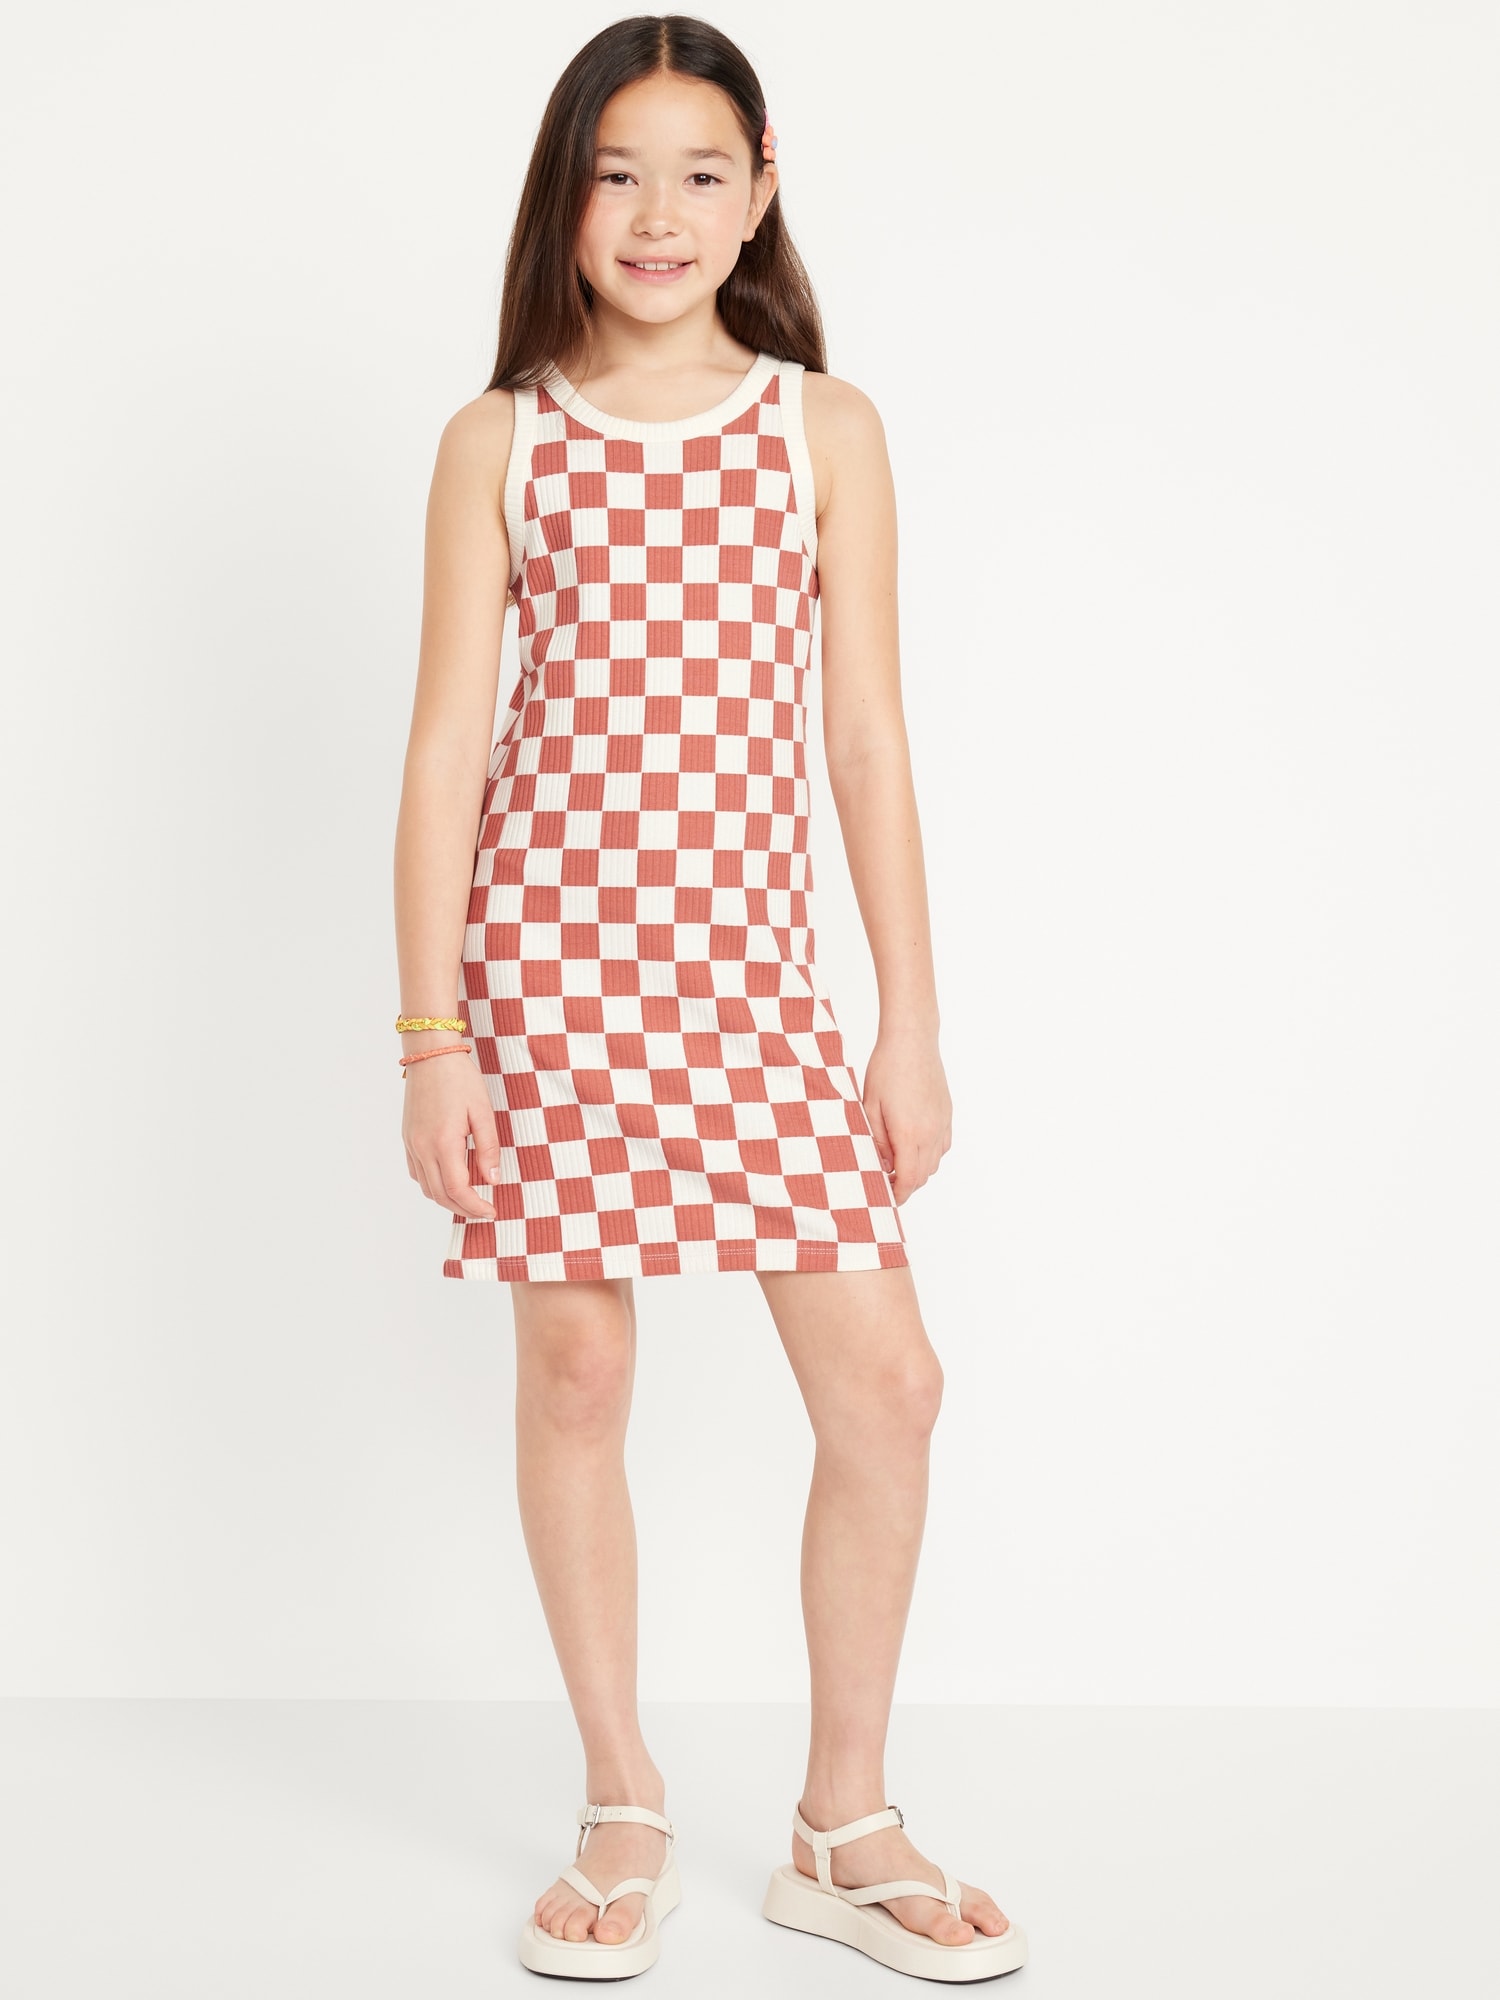 Printed Sleeveless Rib-Knit Dress for Girls